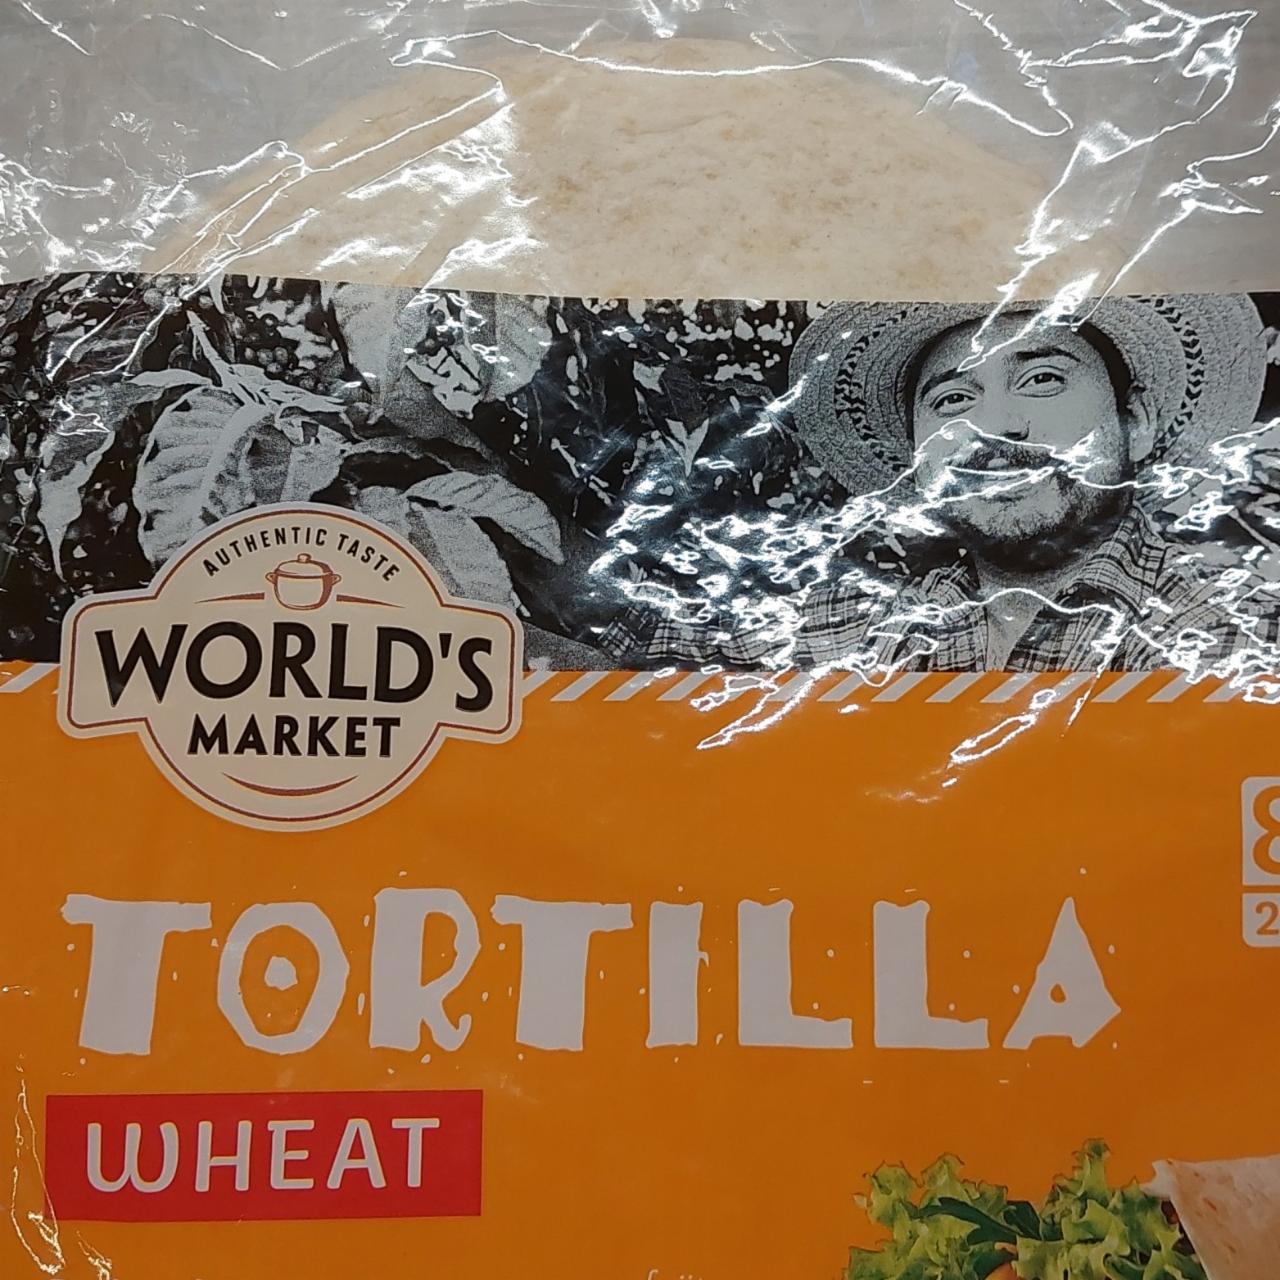 Fotografie - Tortilla wheat World's Market